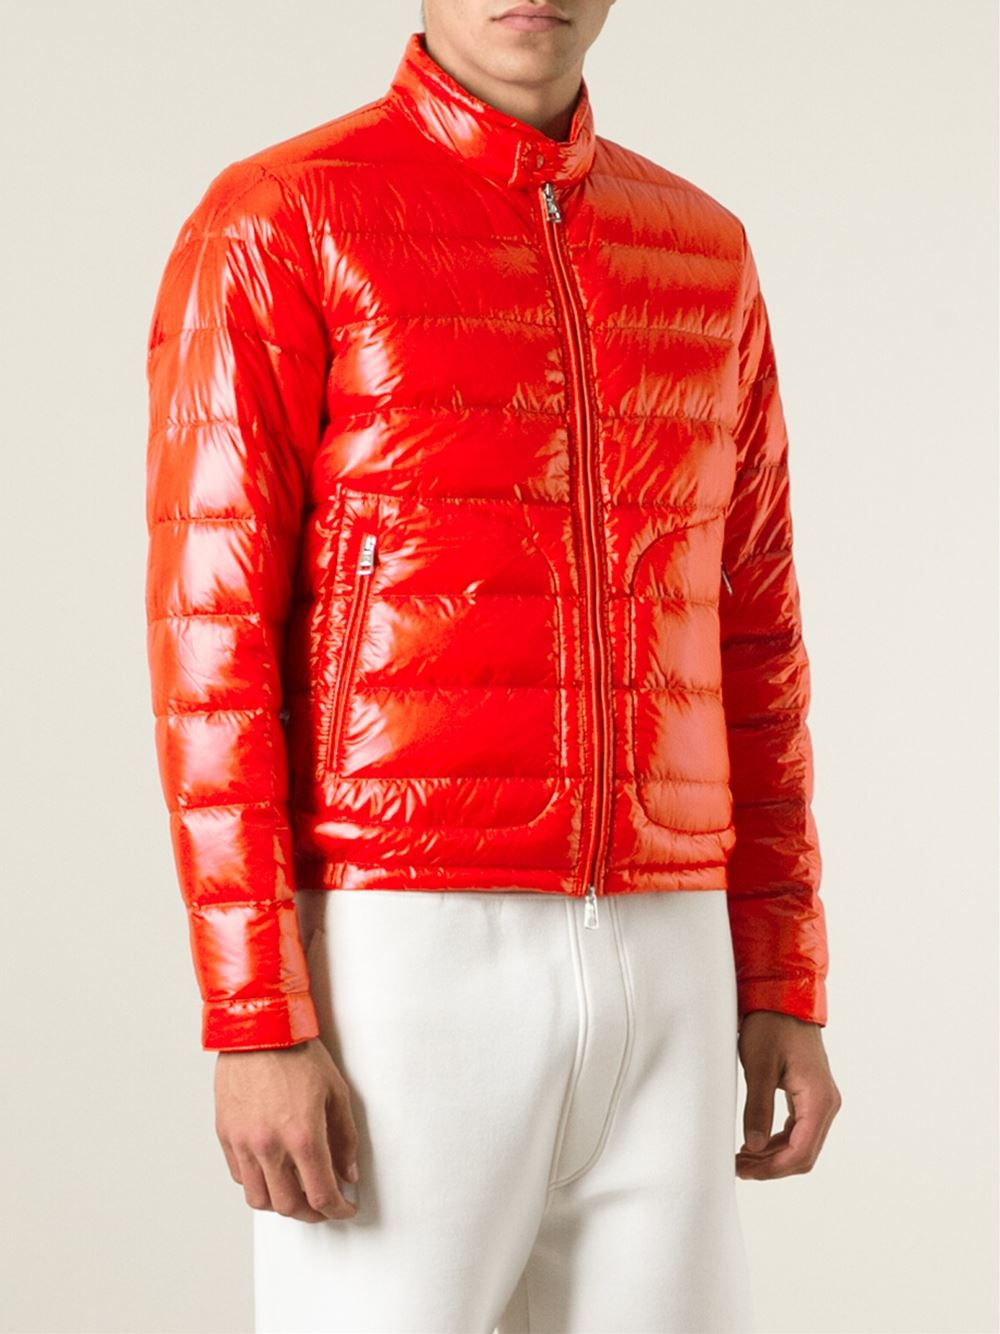 Moncler 'Acorus' Padded Jacket in Orange for Men - Lyst